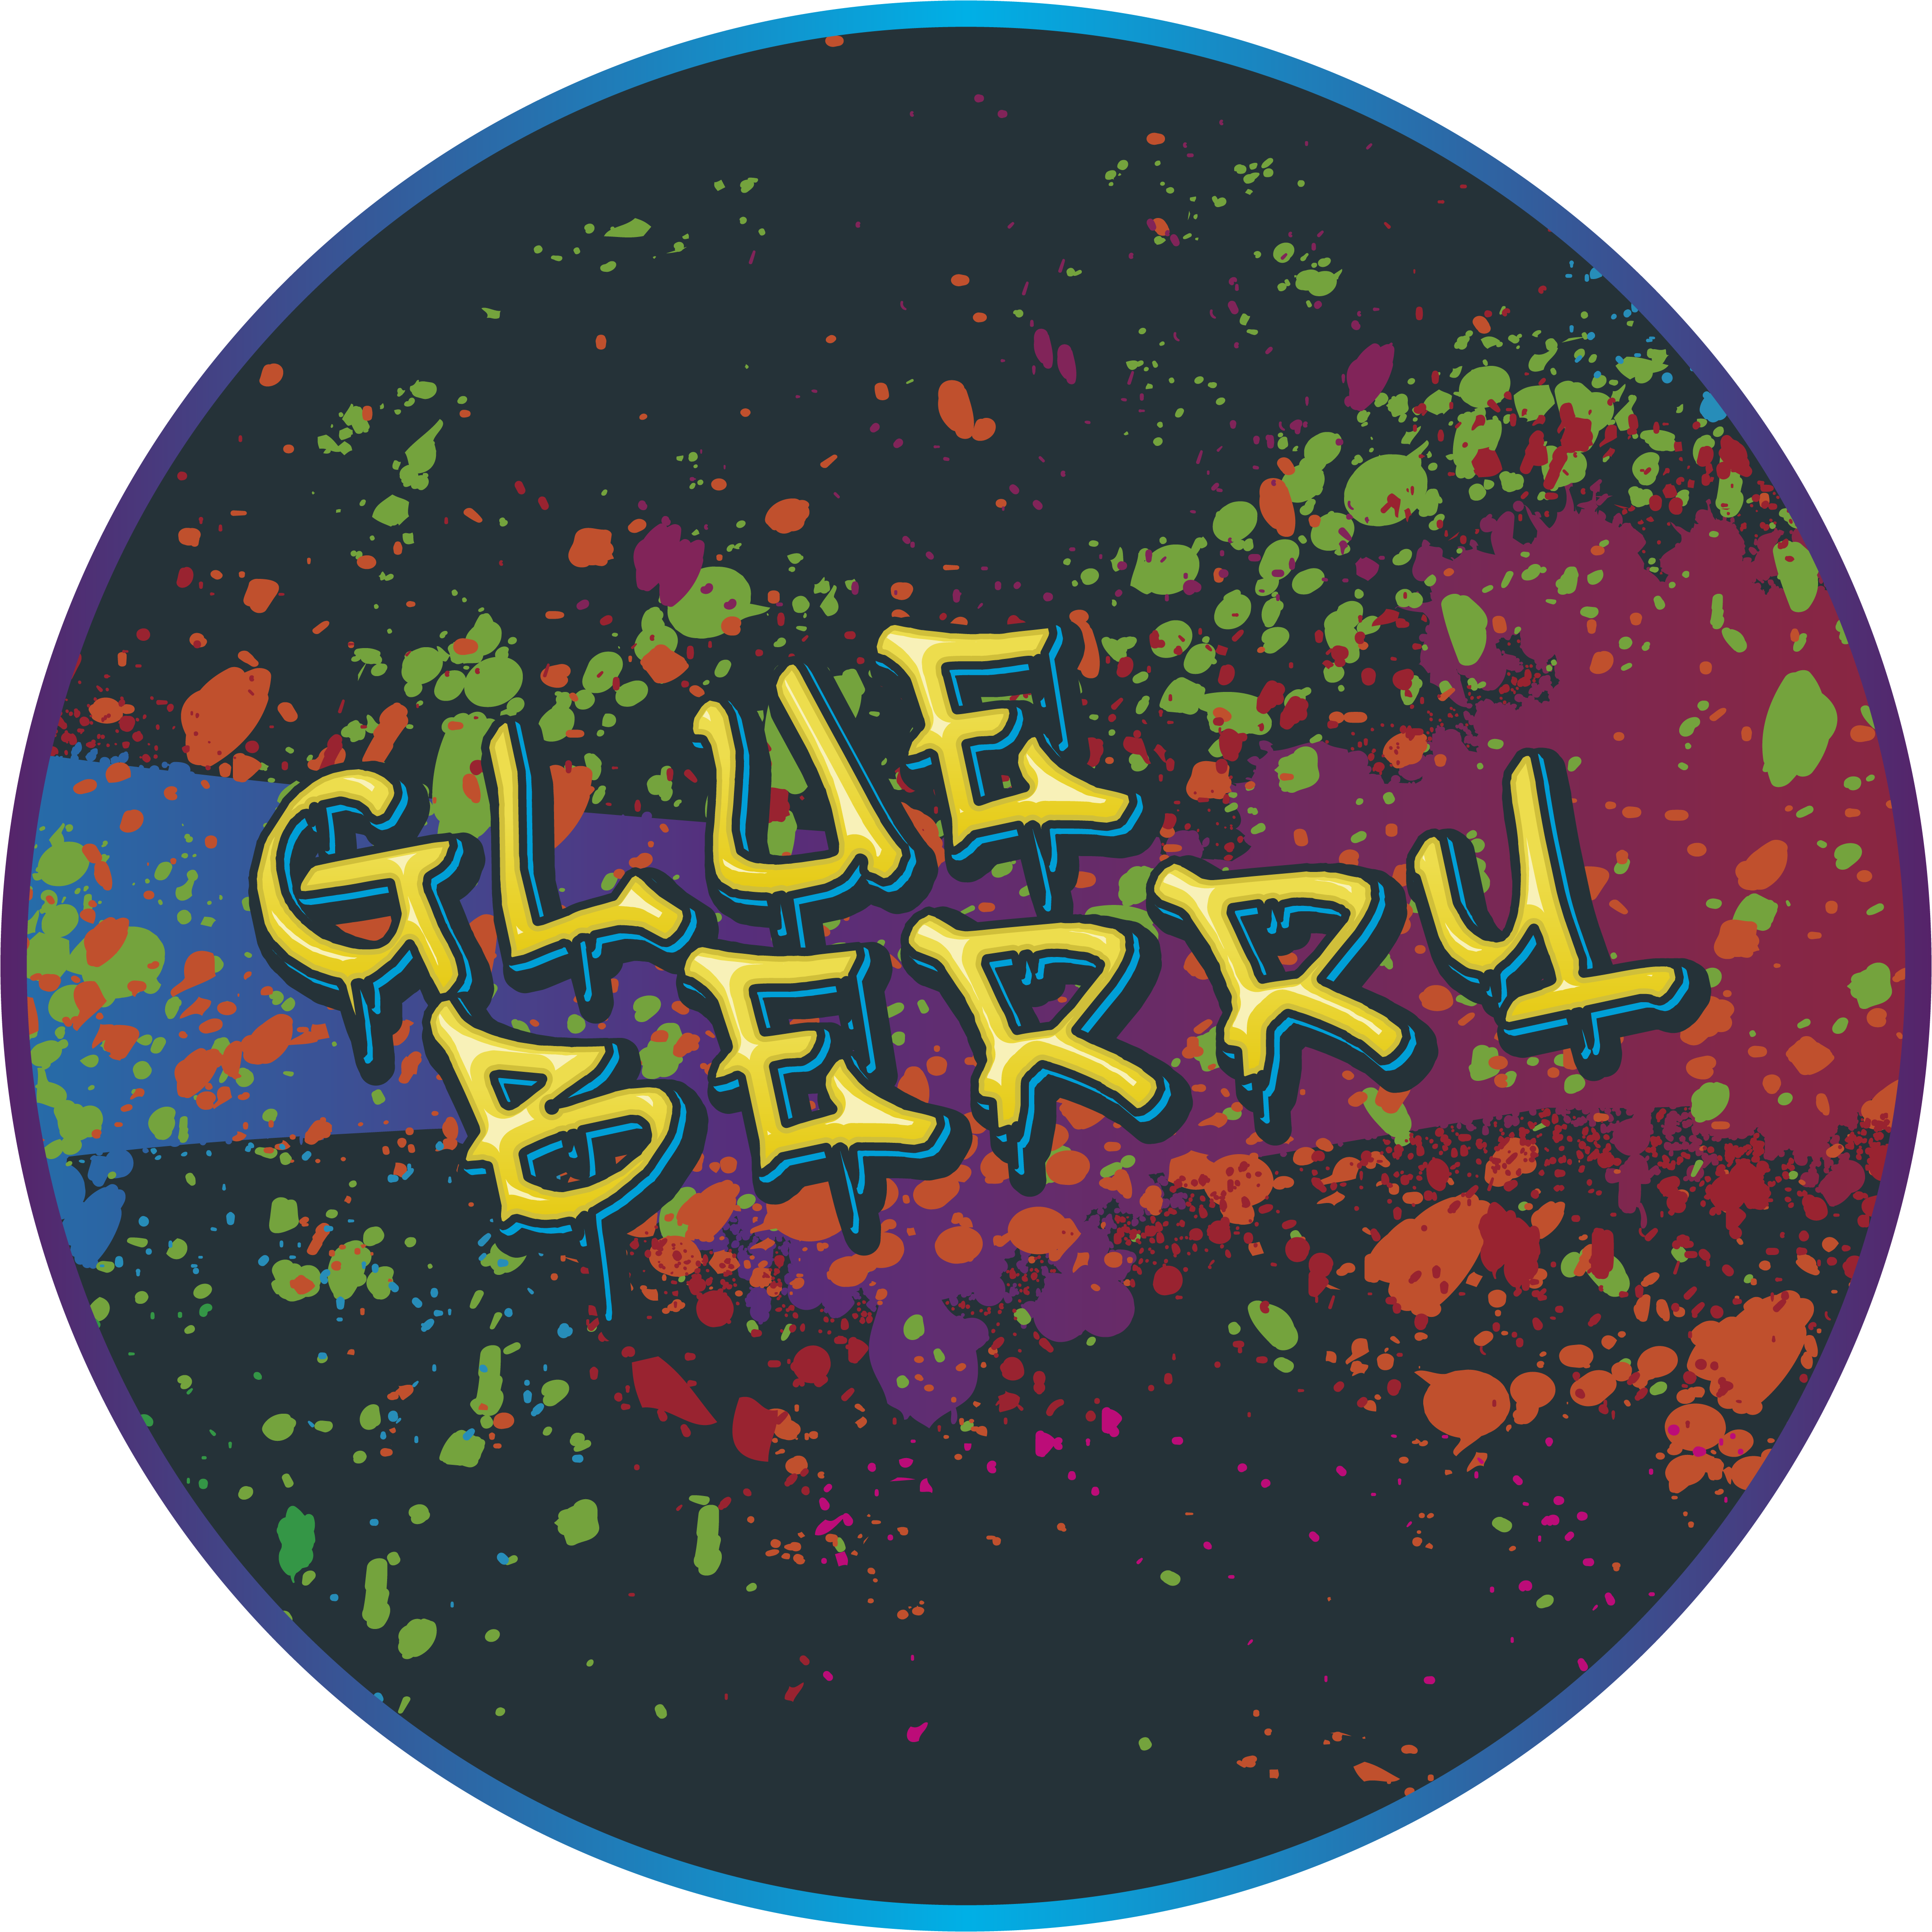 Glueberry